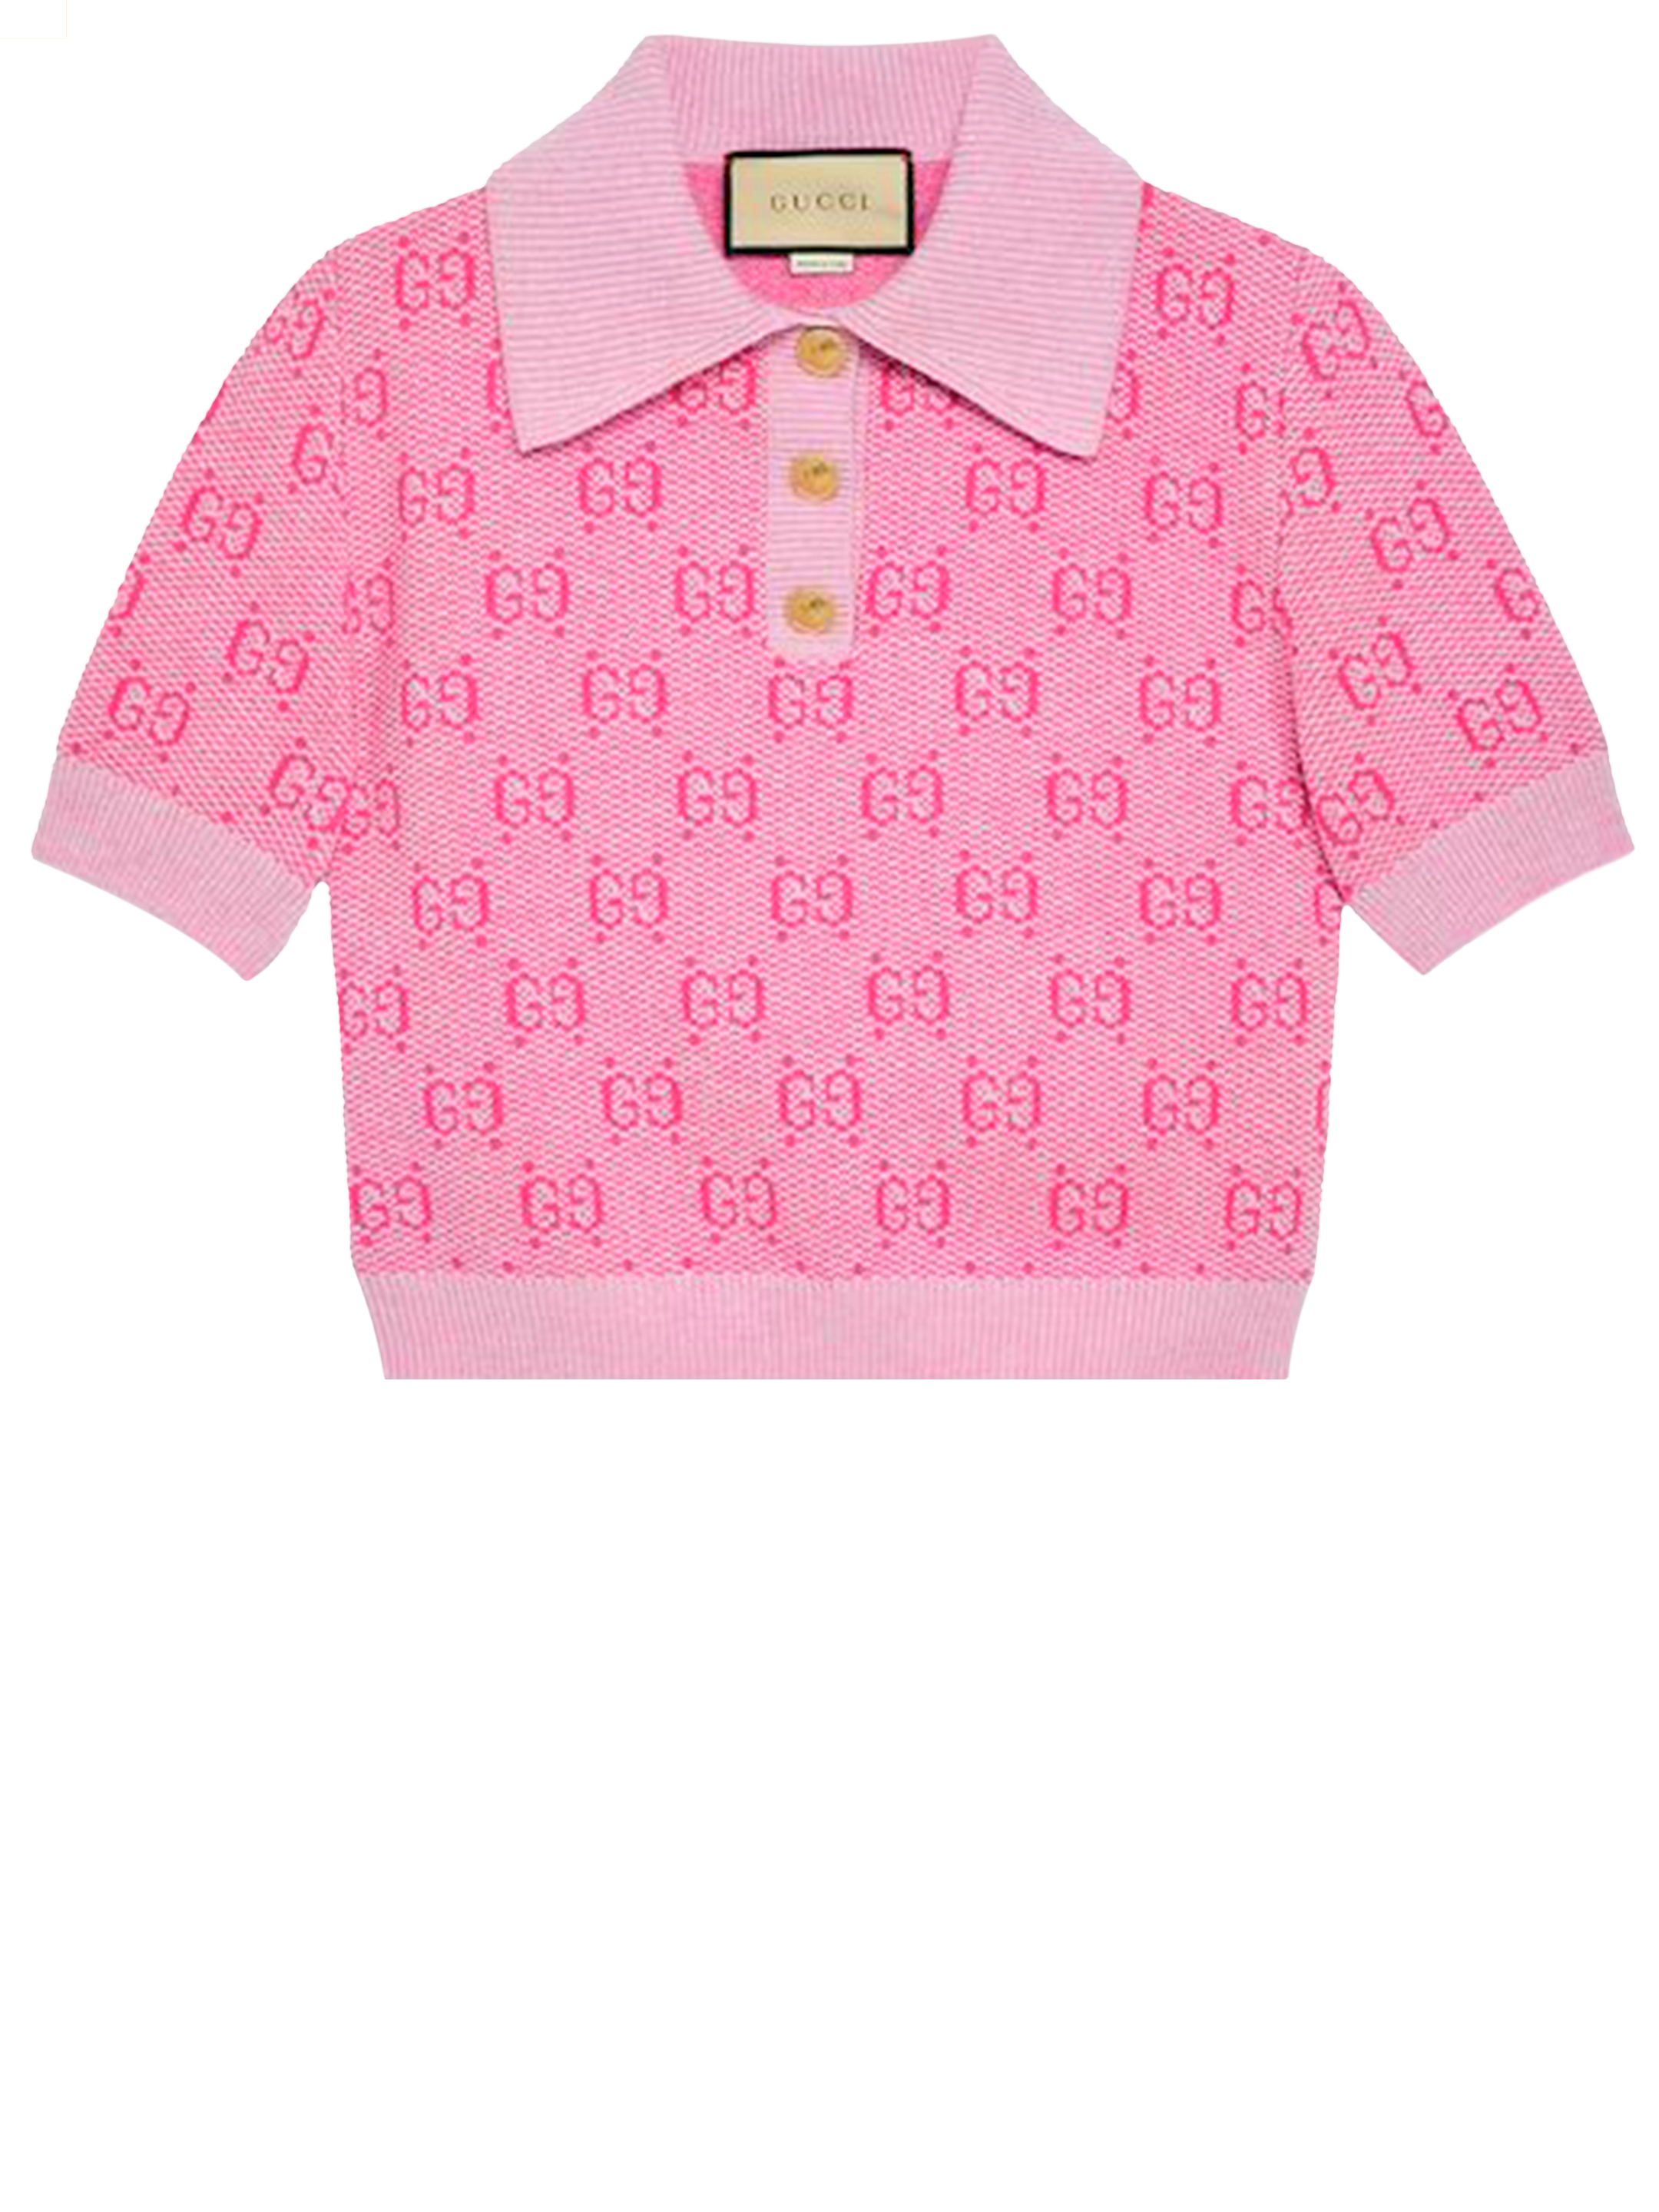 Рубашка Gucci GG jacquard wool polo, фуксия рубашка на пуговицах с короткими рукавами и абстрактным рисунком alexander mcqueen цвет lead pink